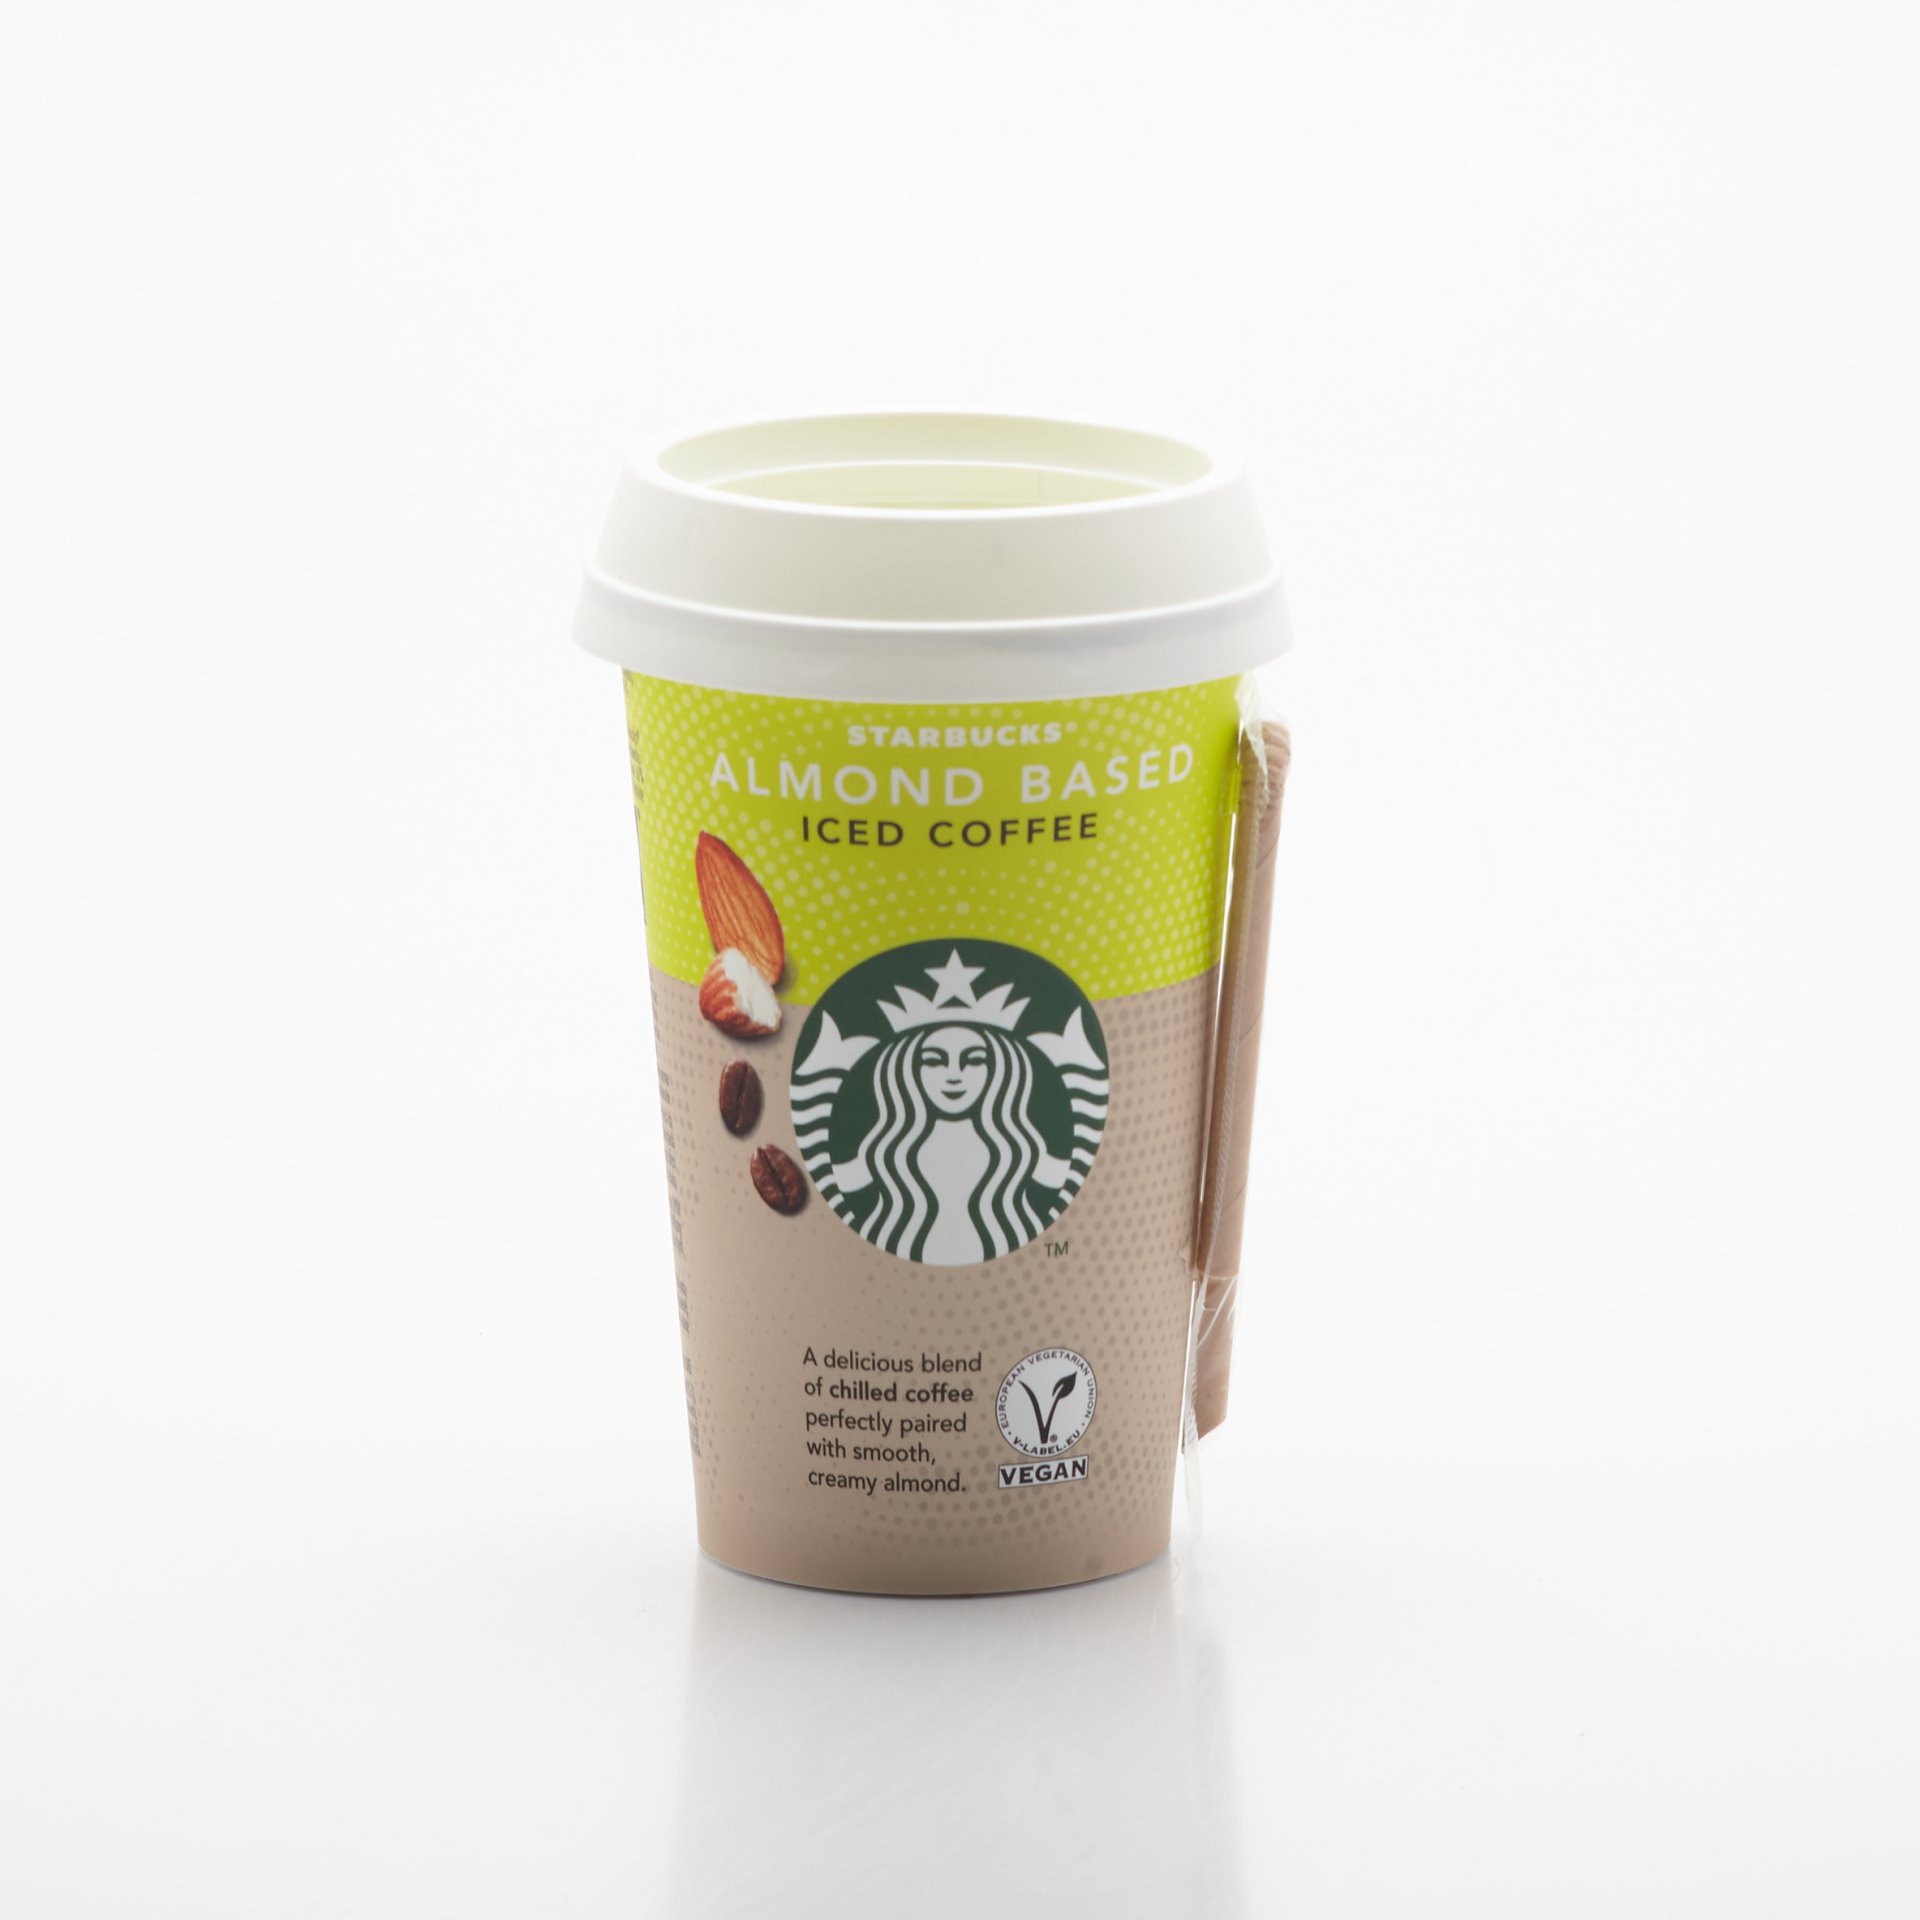 Starbucks Almond Iced coffee 220ml